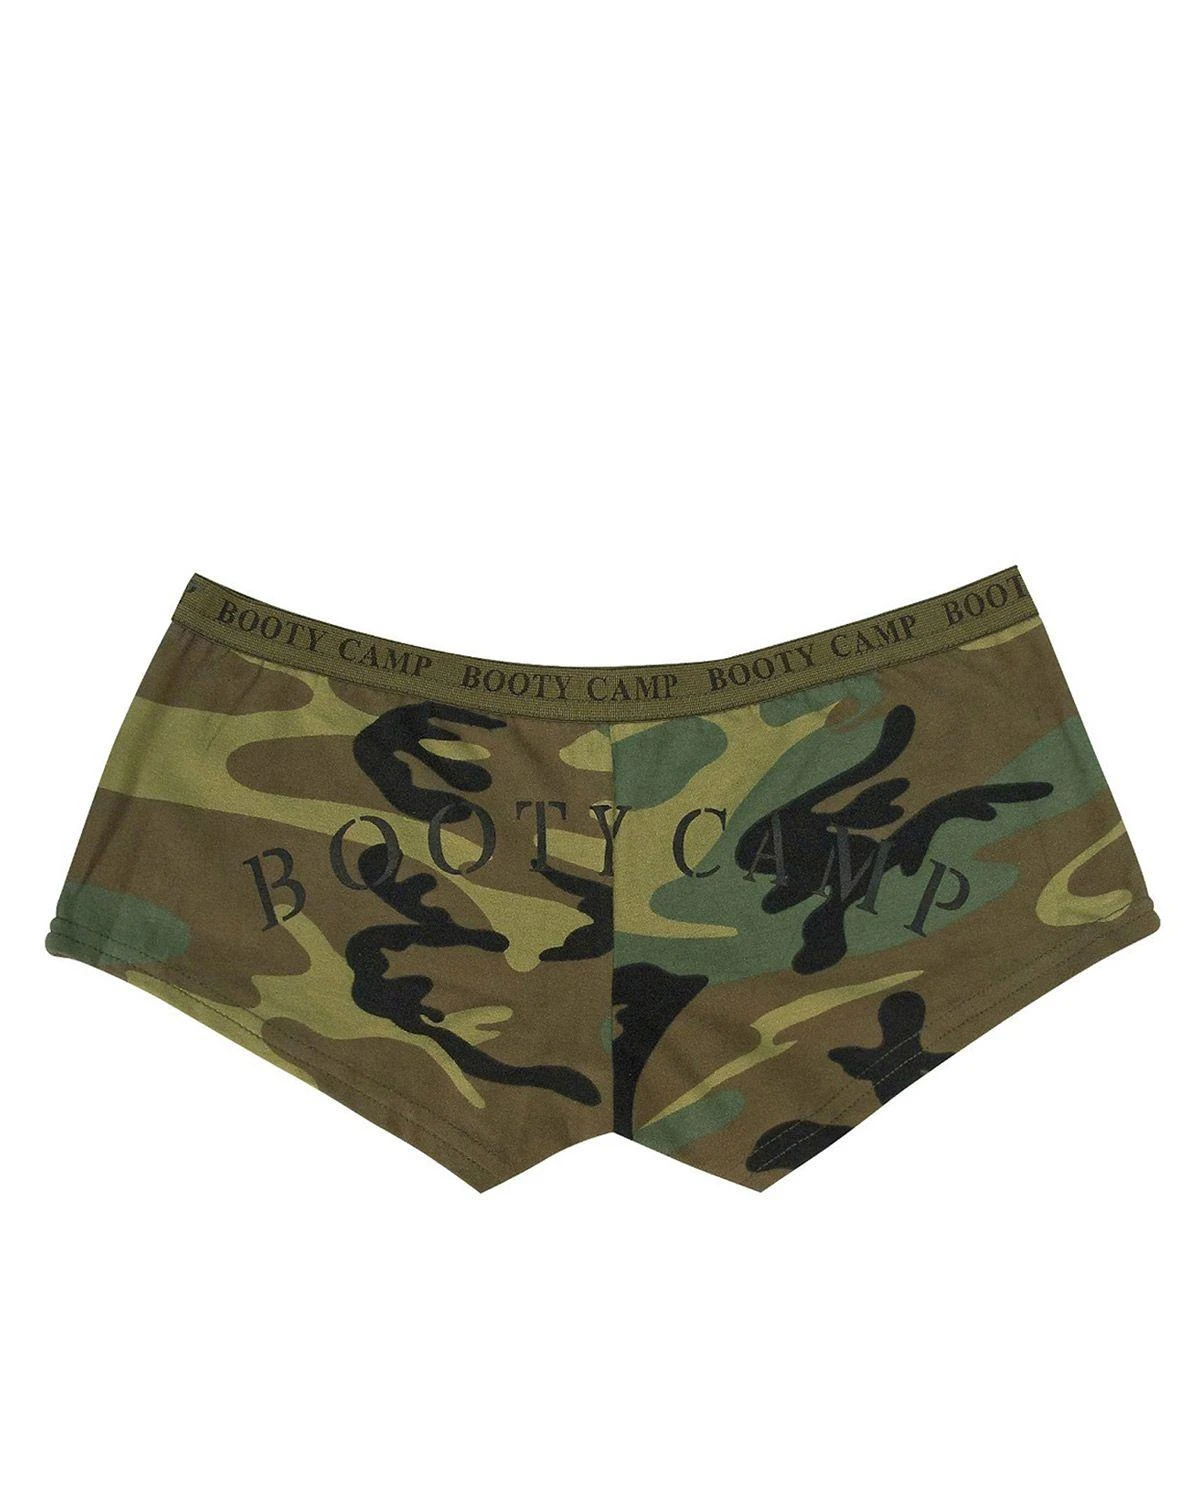 Buy Rothco Booty Camp Shorts, Money Back Guarantee